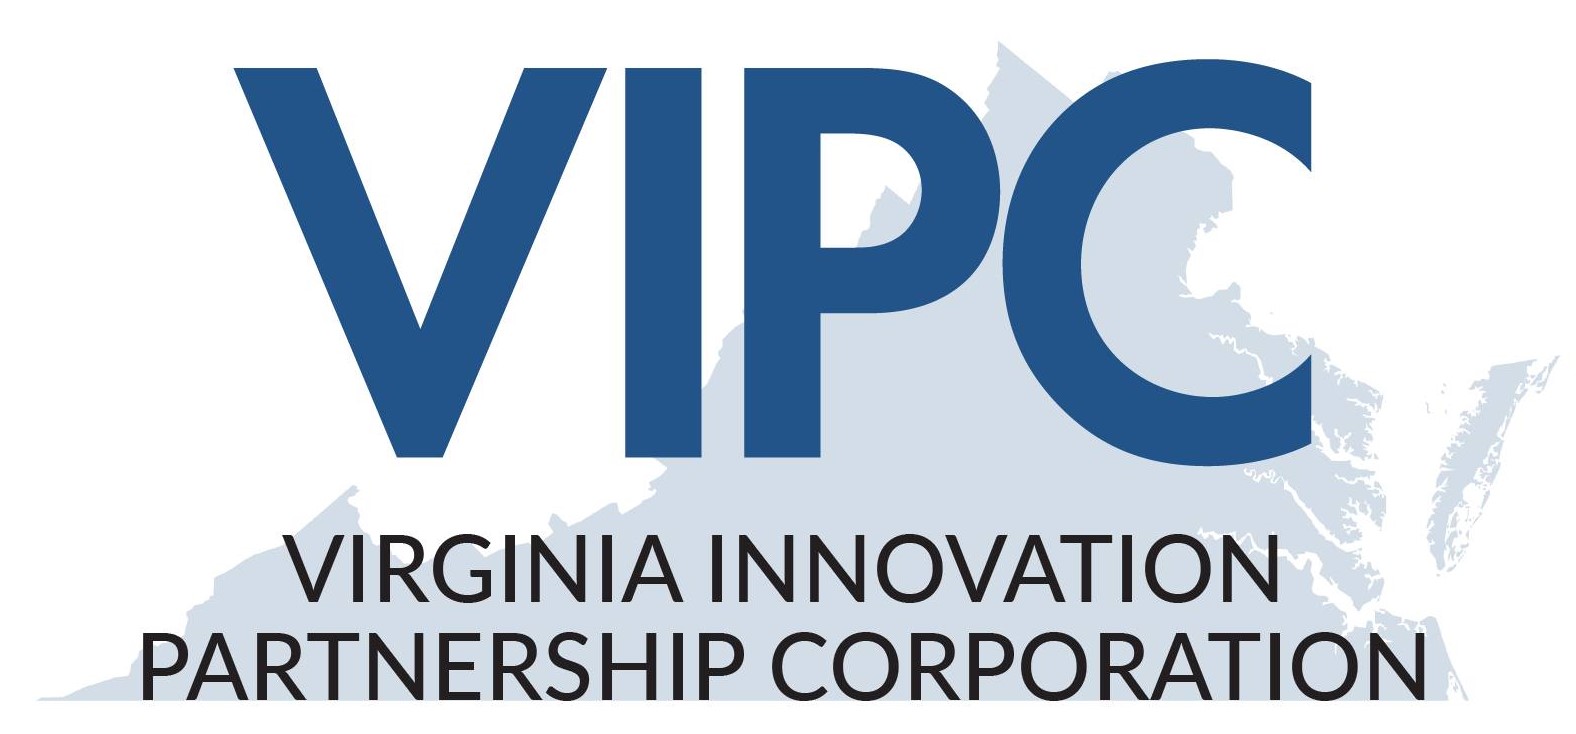 Virginia Innovation Partnership Corporation logo